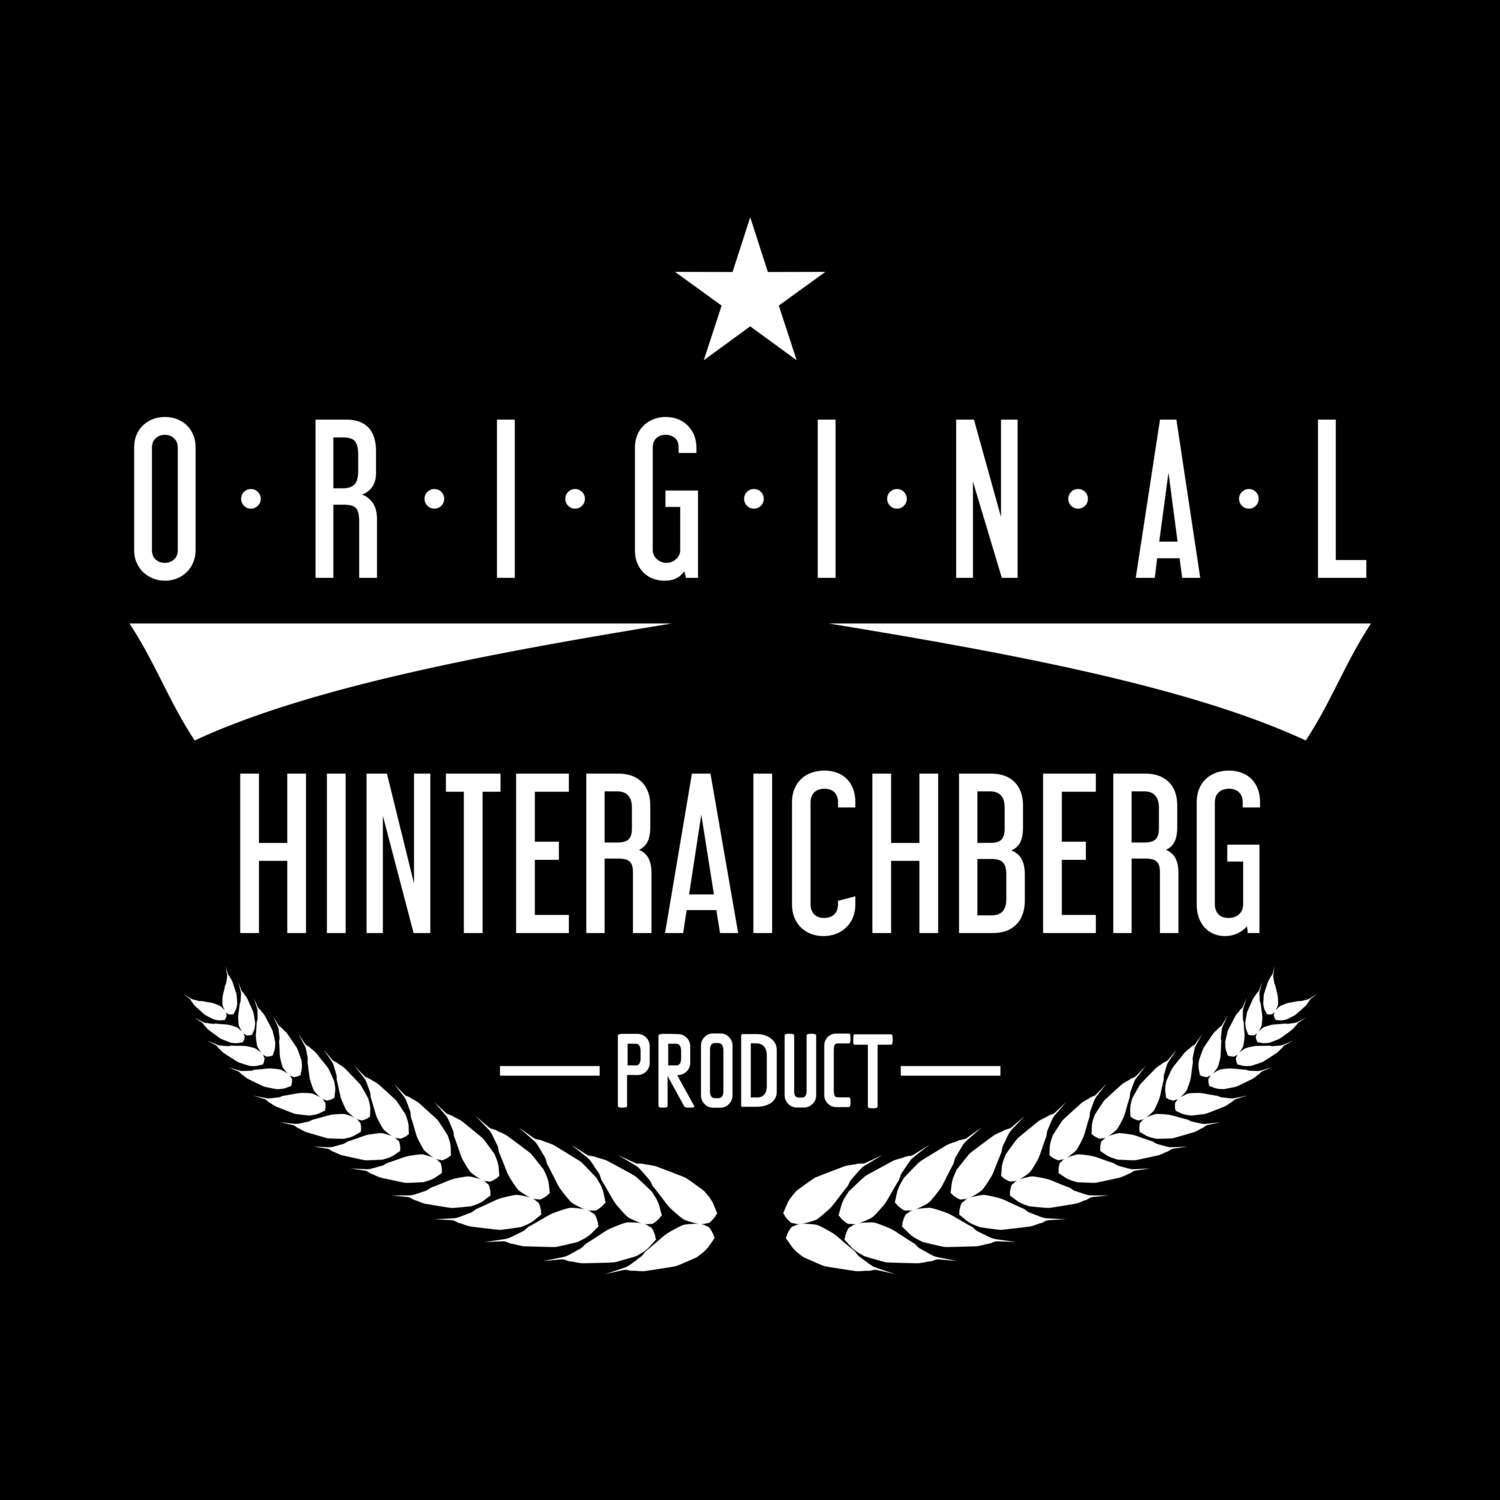 Hinteraichberg T-Shirt »Original Product«